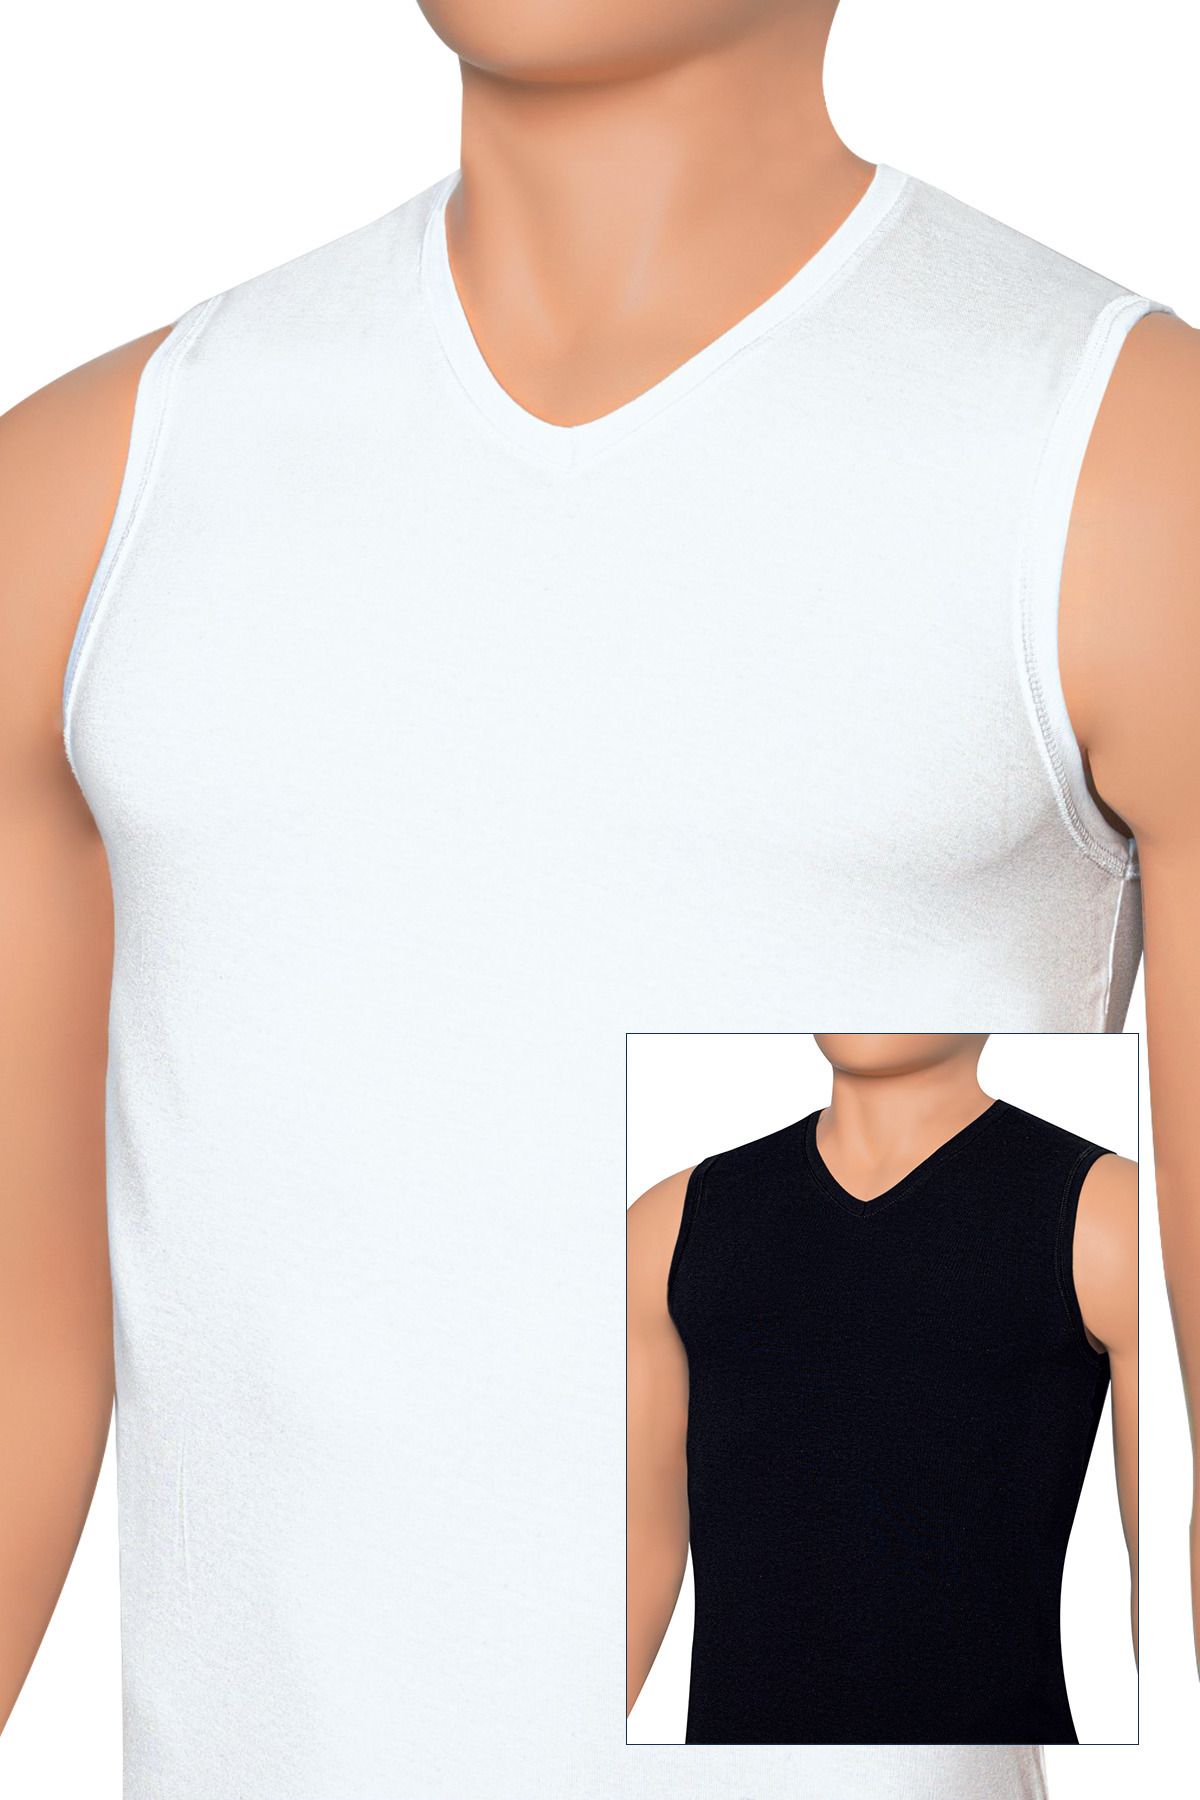 Öts Erkek Renkli 2'li Pamuklu Likralı Sıfır Kol V Yaka Atlet-gömlek Altına Giymeye Uygun Atlet